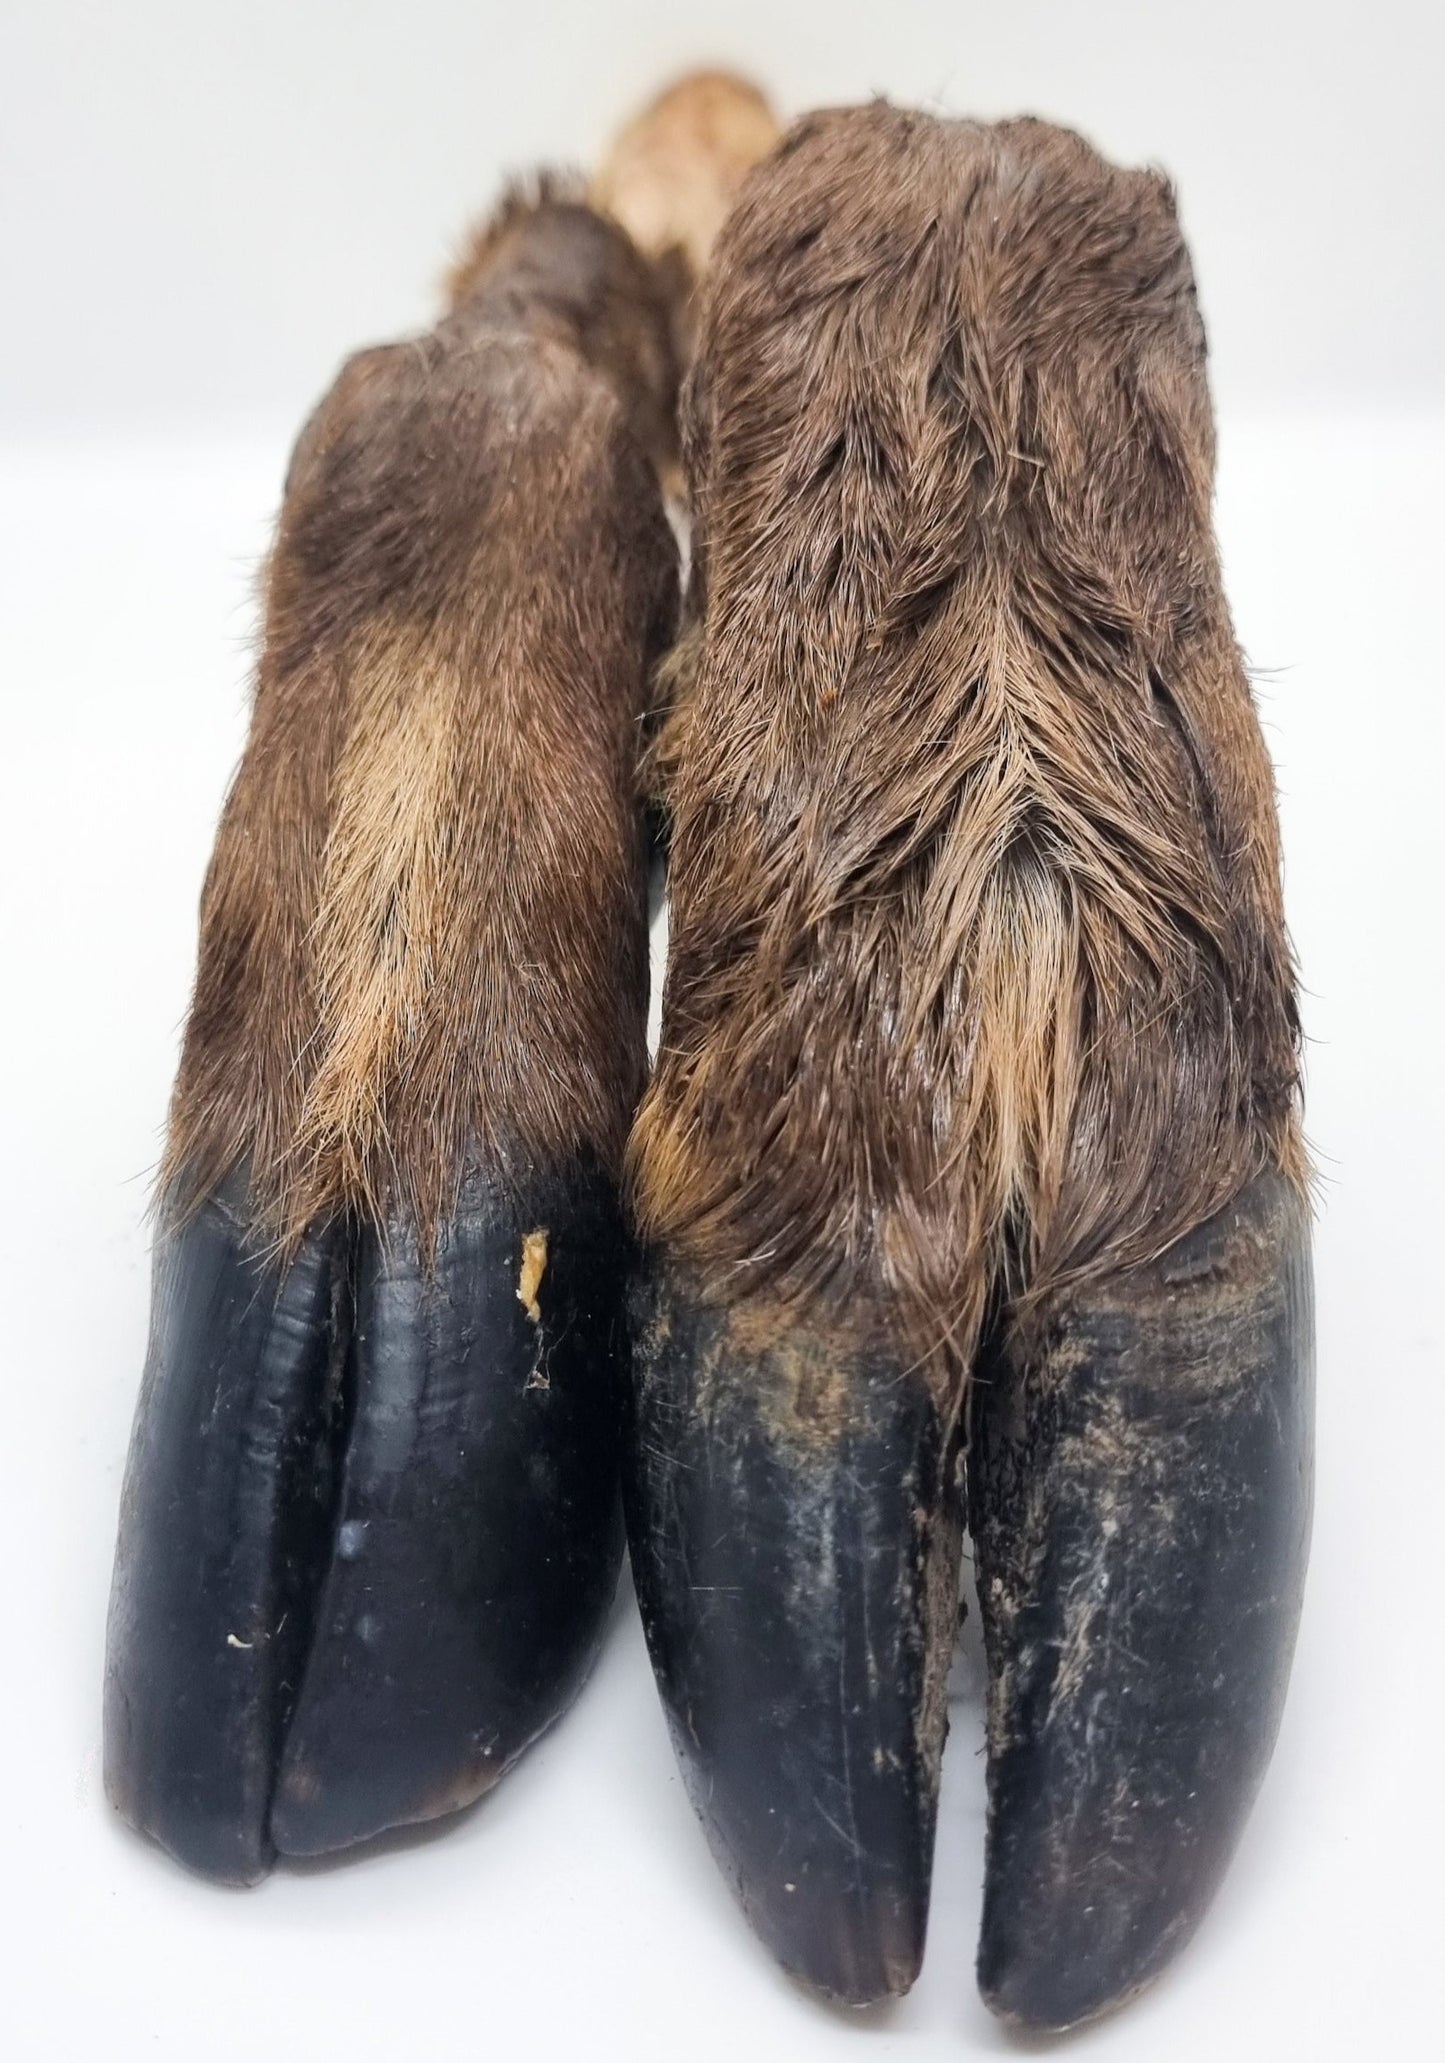 Deer Foot with Fur